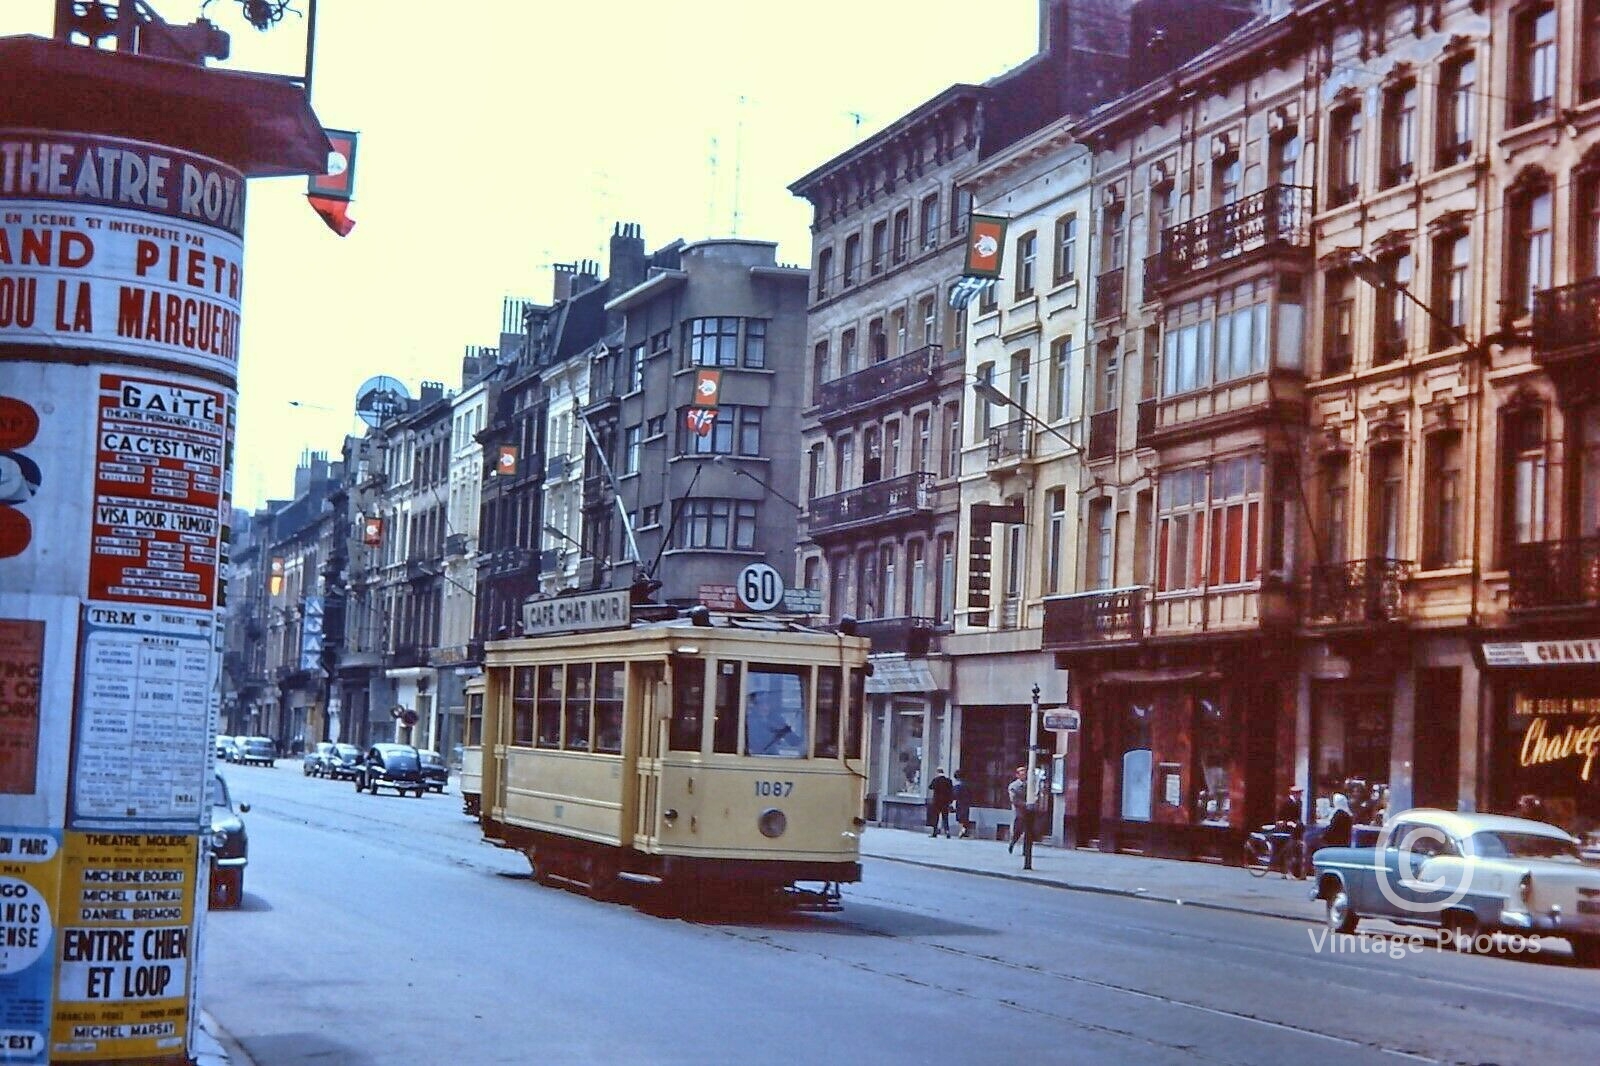 1962 Busy Belgium Street Scene, Buildings, Classic Cars & Tram